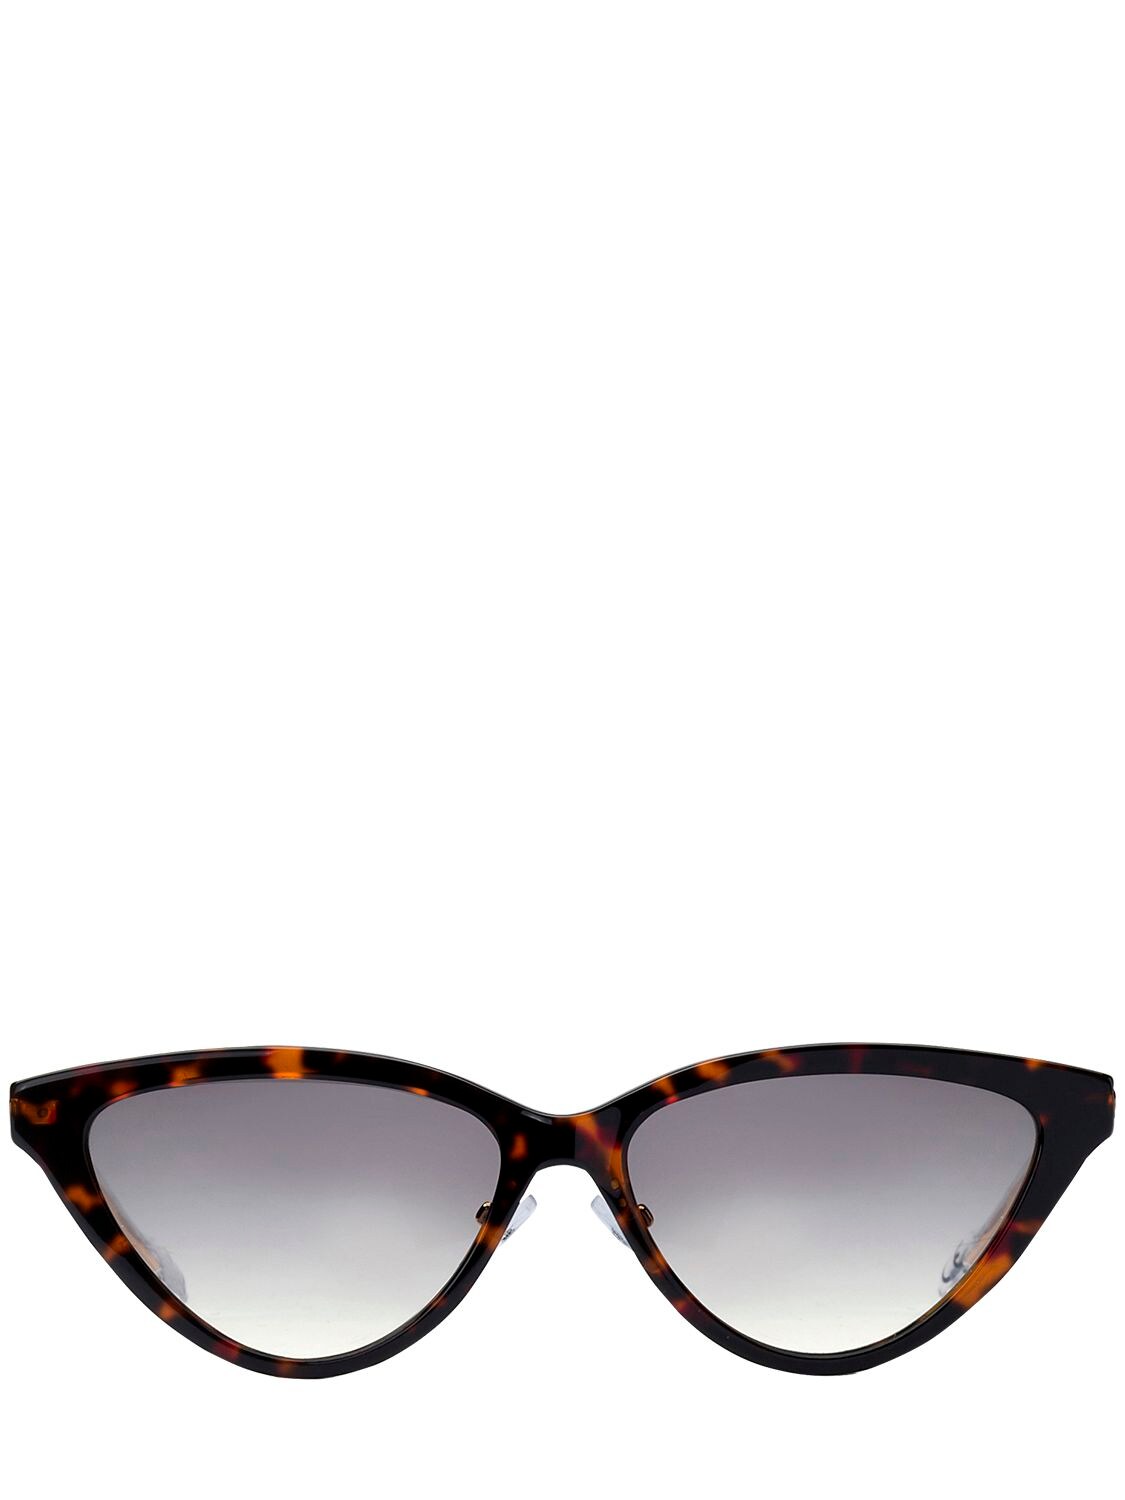 Adidas Originals By Italia Independent Acetate Cat-eye Sunglasses In Havana Brown